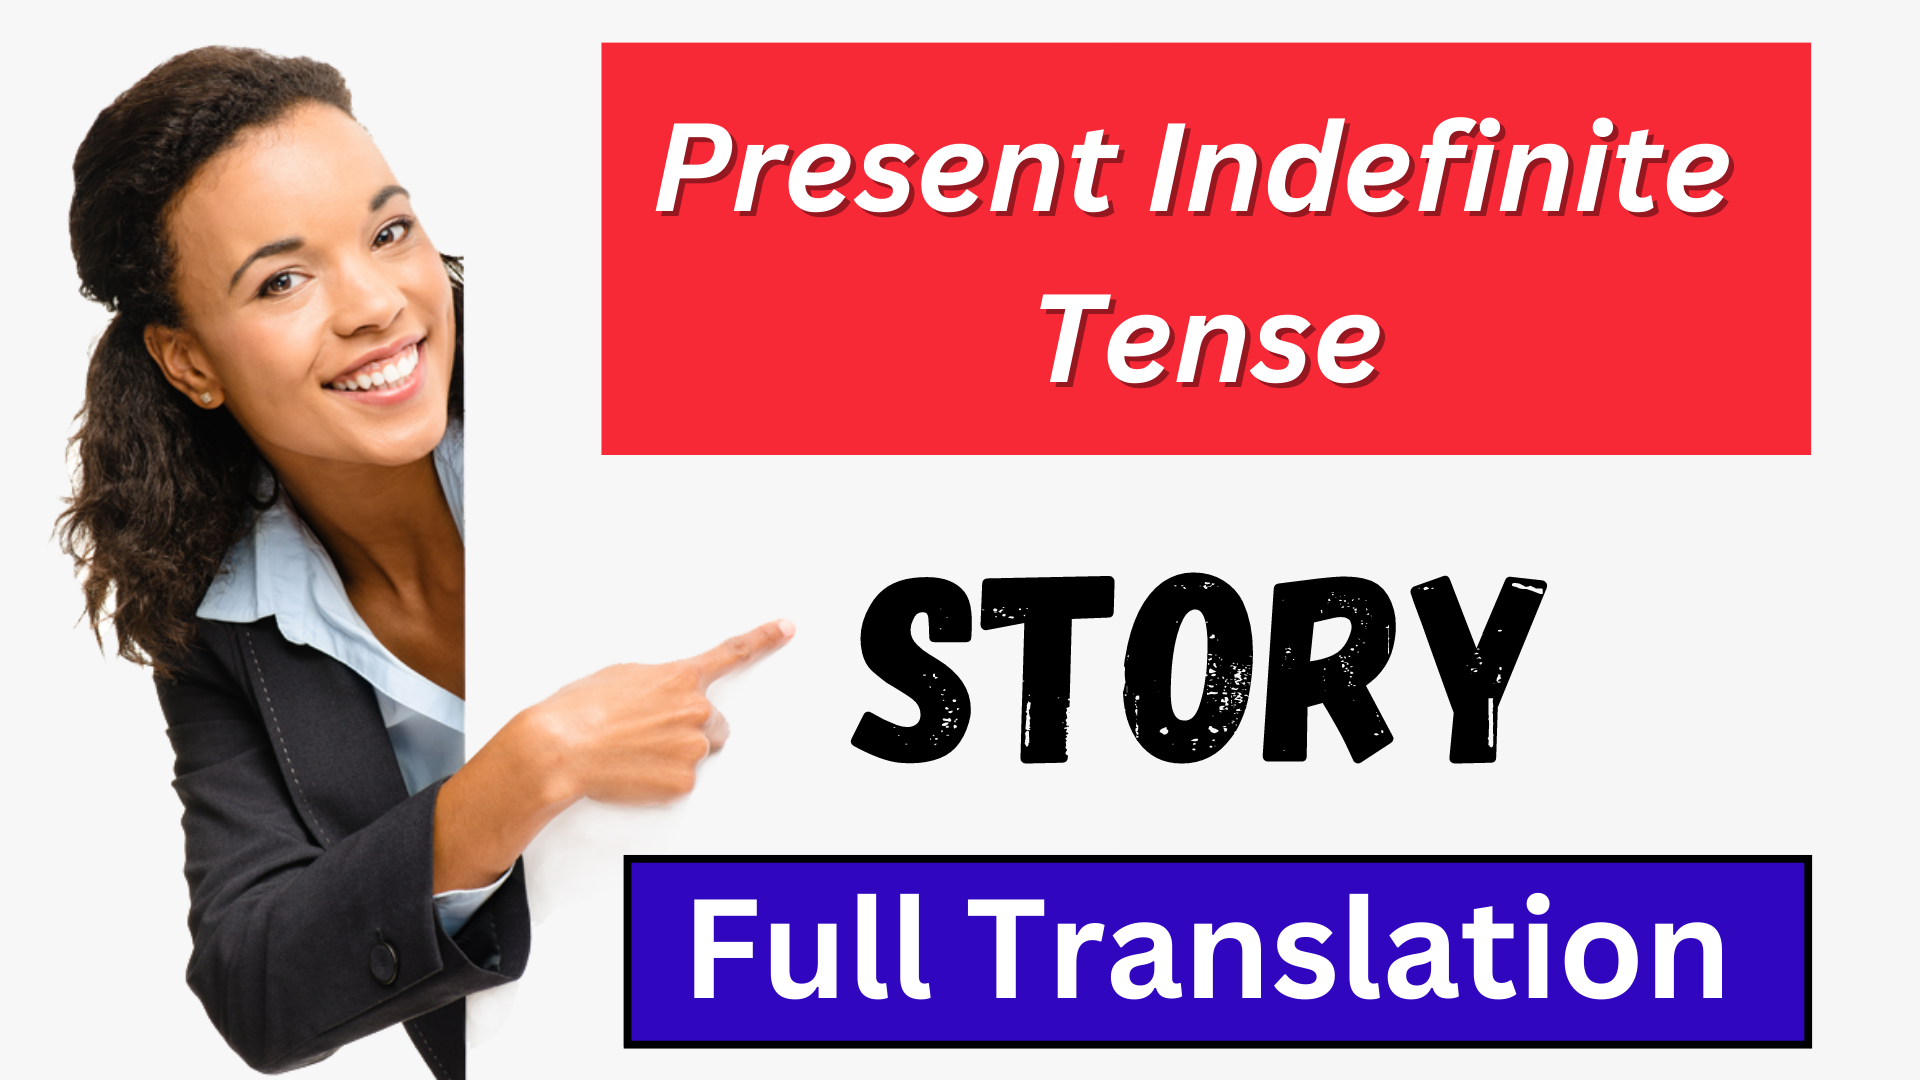 simple-present-tense-story-in-hindi-present-indefinite-tense-stories